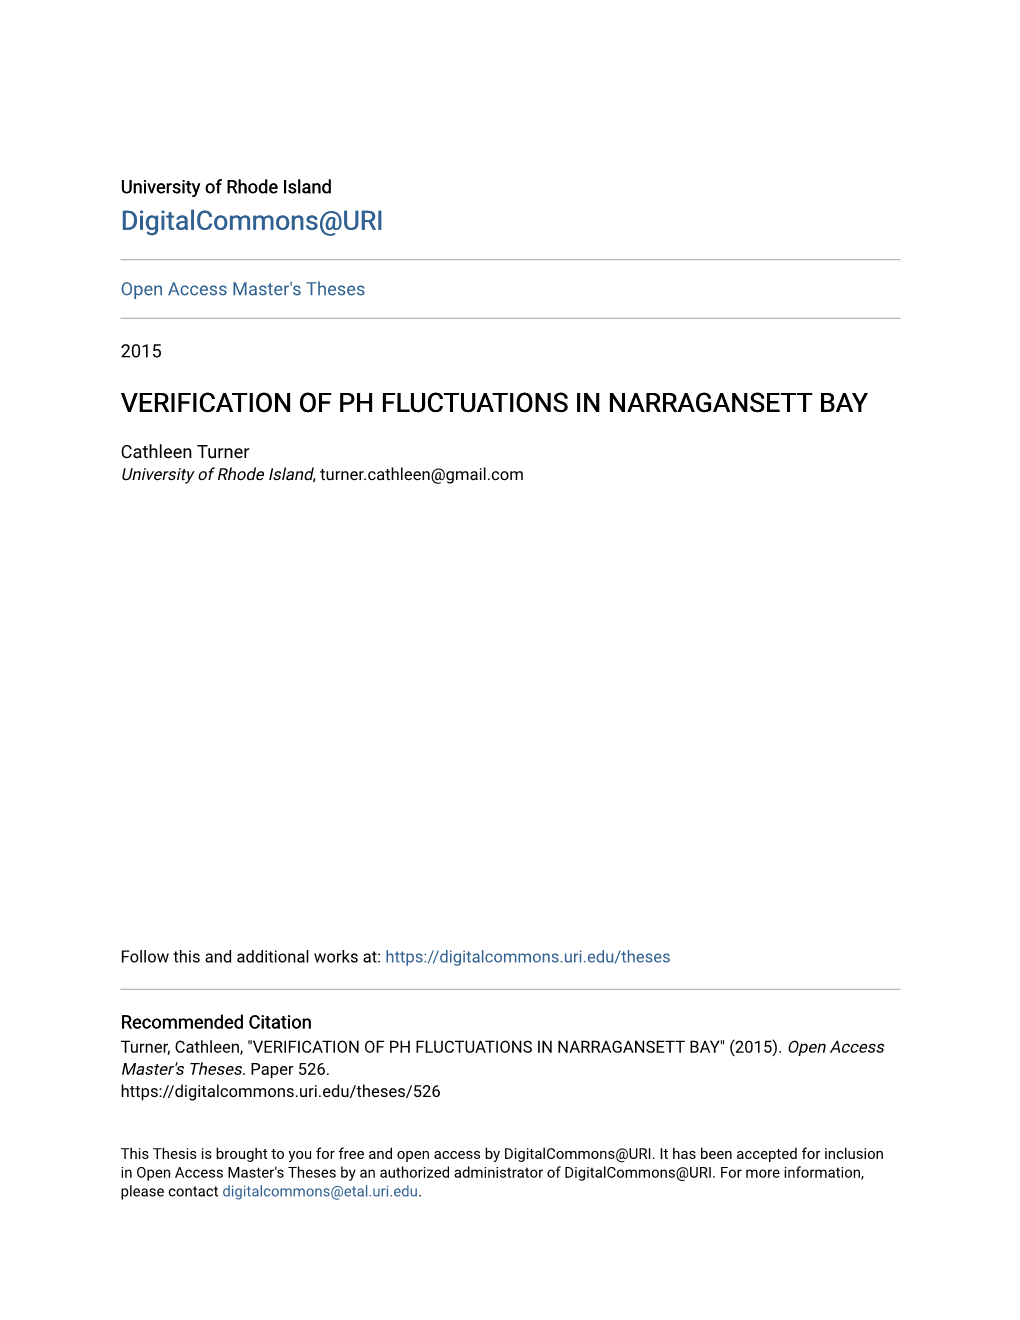 Verification of Ph Fluctuations in Narragansett Bay